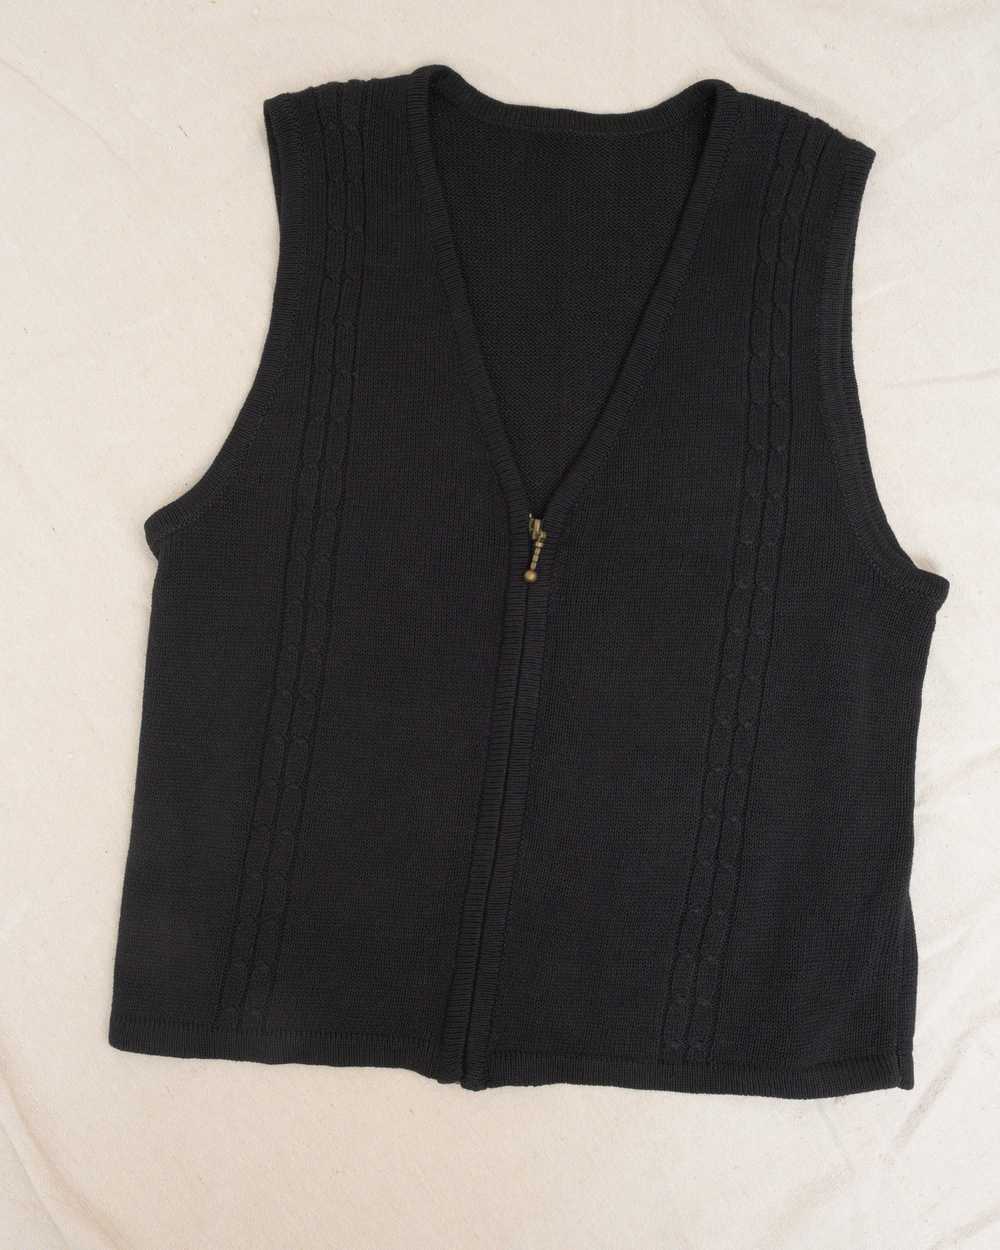 Vintage Black Knit Vest (S/M) - image 6